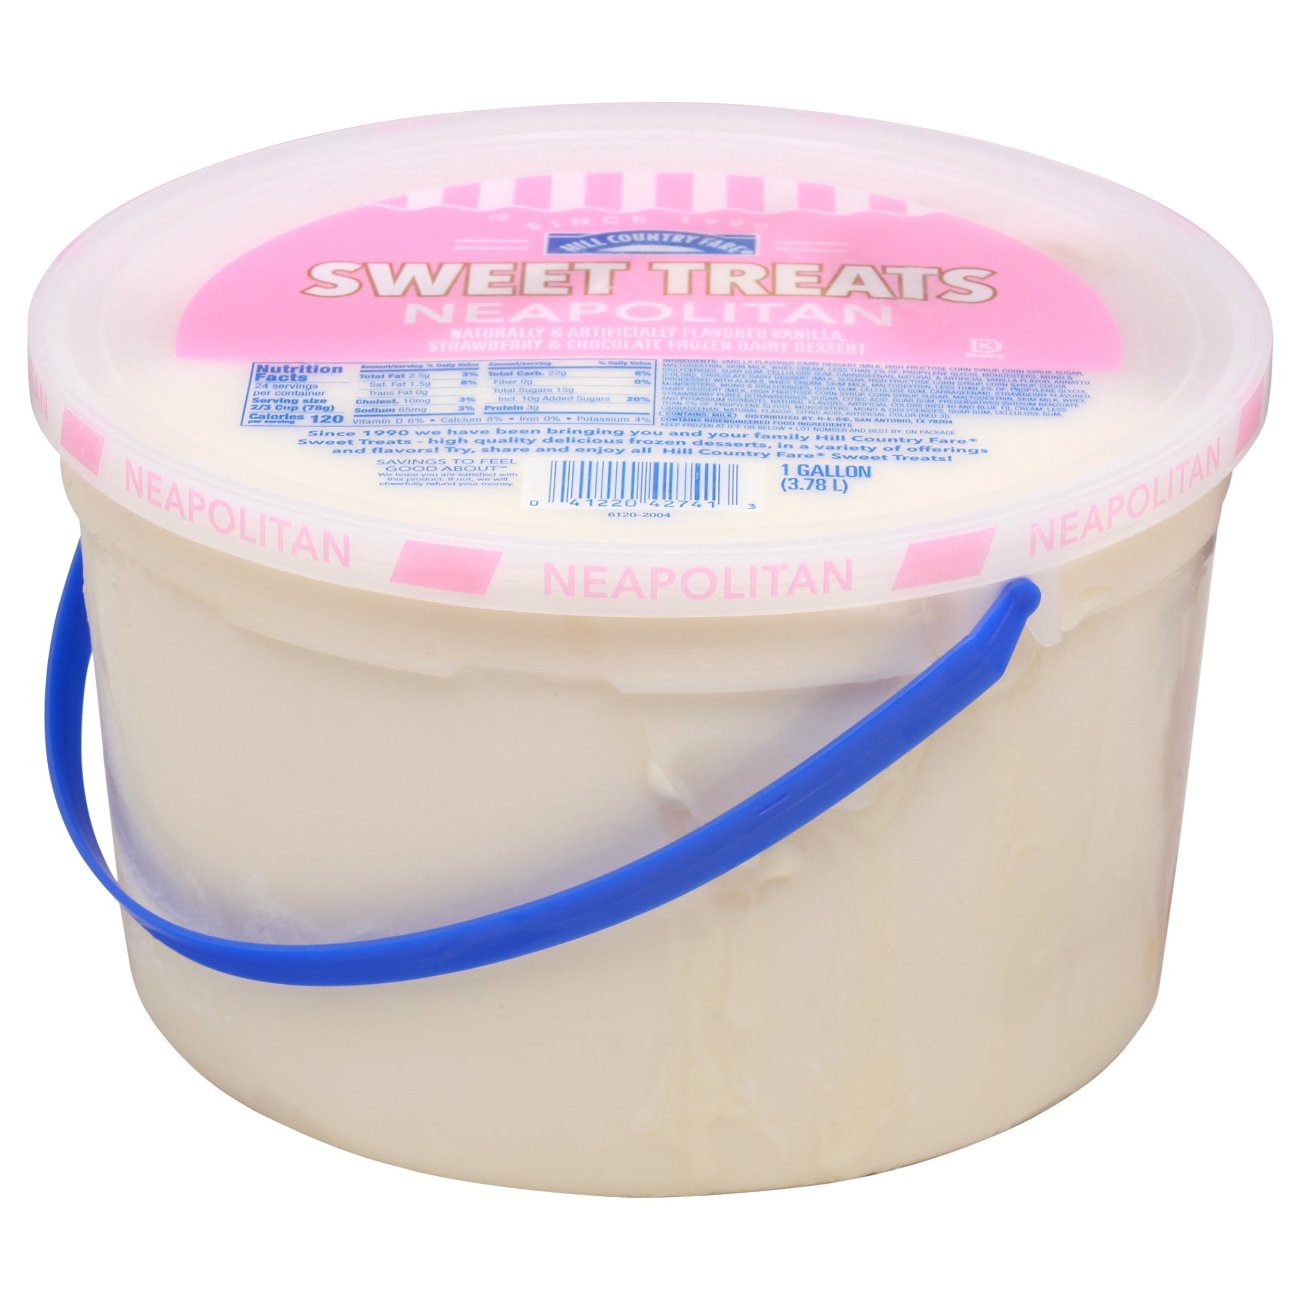 1 Gallon Ice Cream Tub with Lid (2)